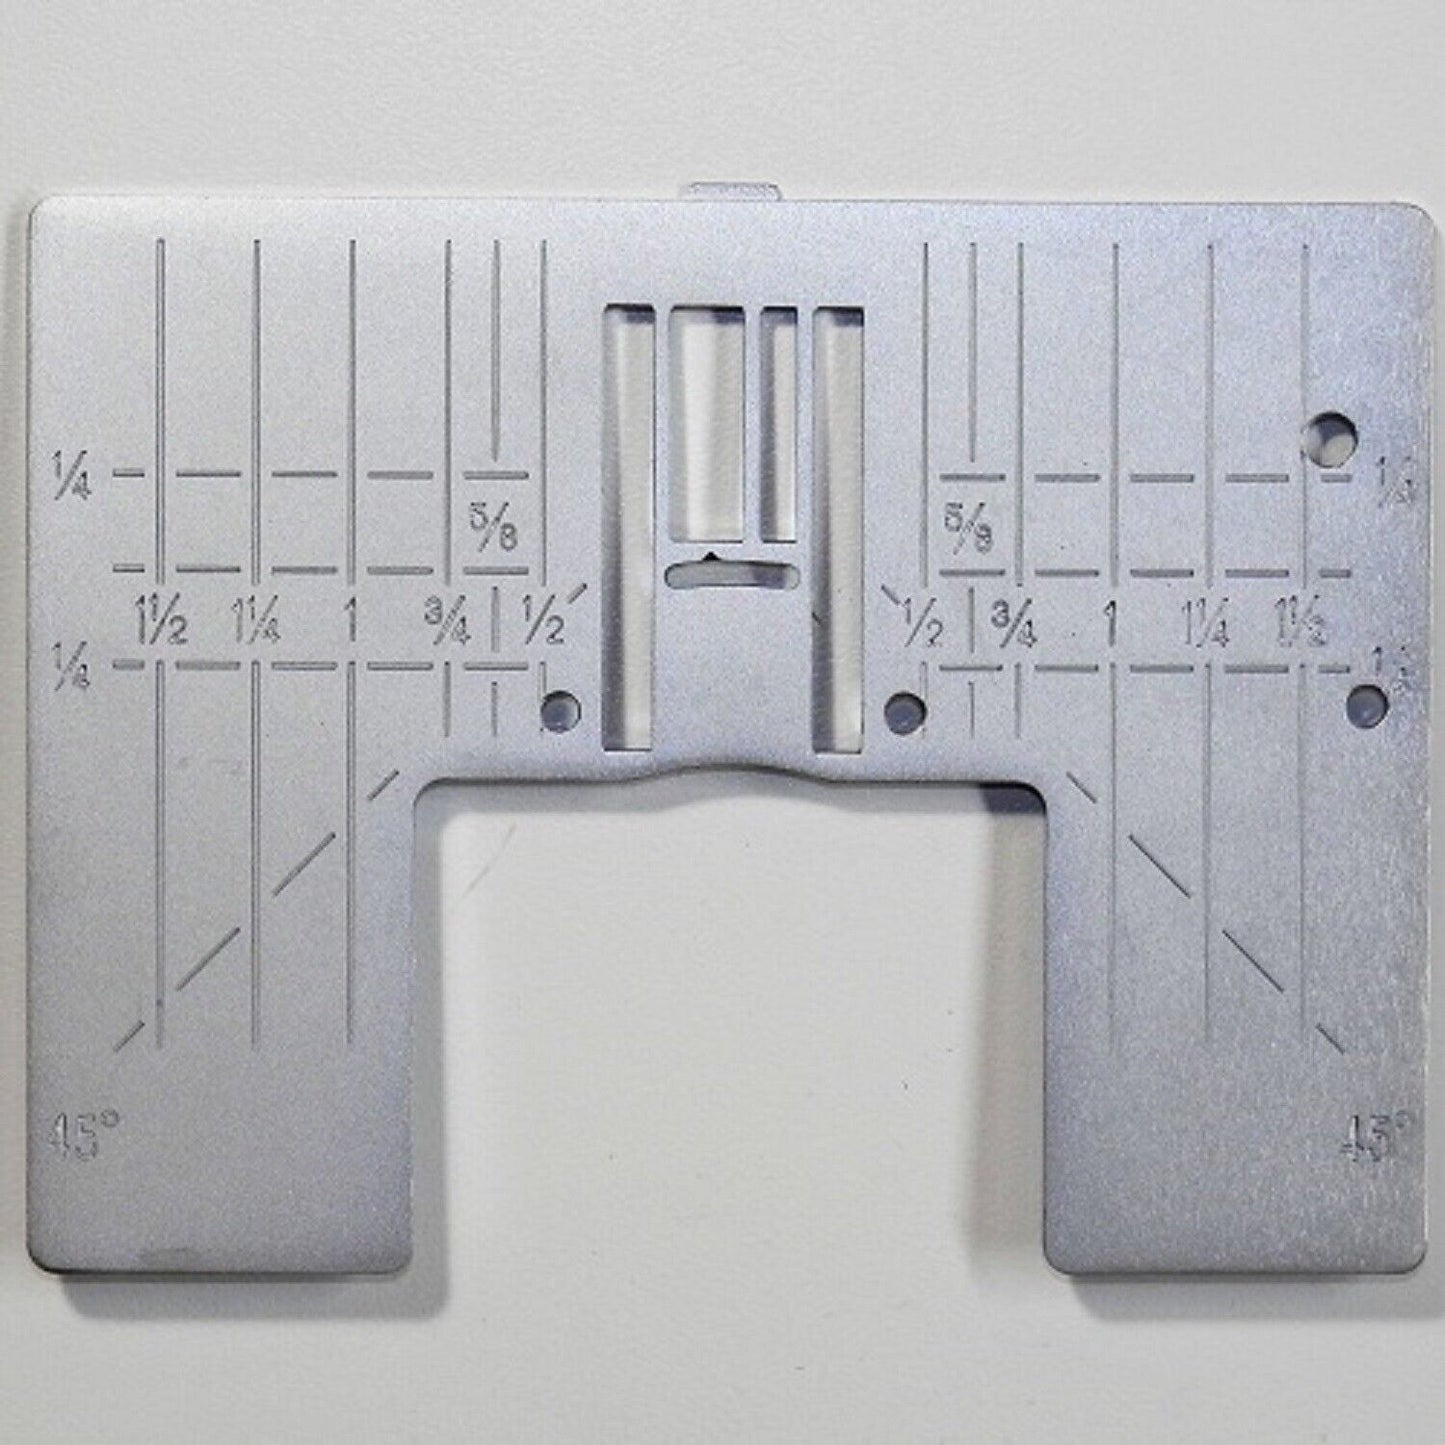 Husqvarna Standard Zigzag Plate with Inch Markings